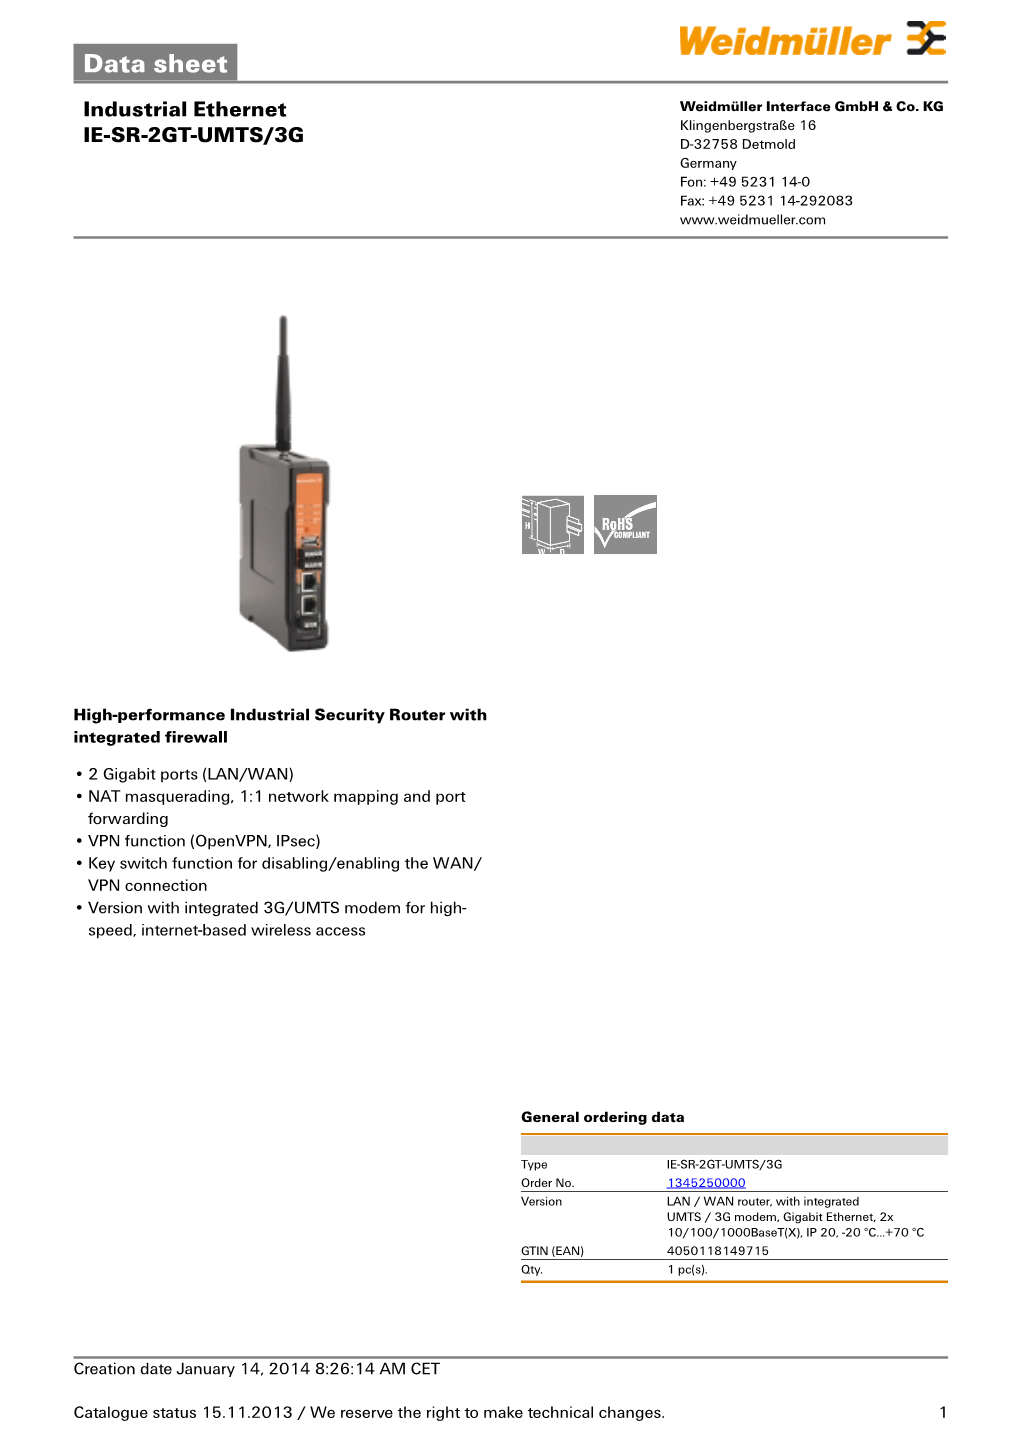 Data Sheet Industrial Ethernet Weidmüller Interface Gmbh & Co